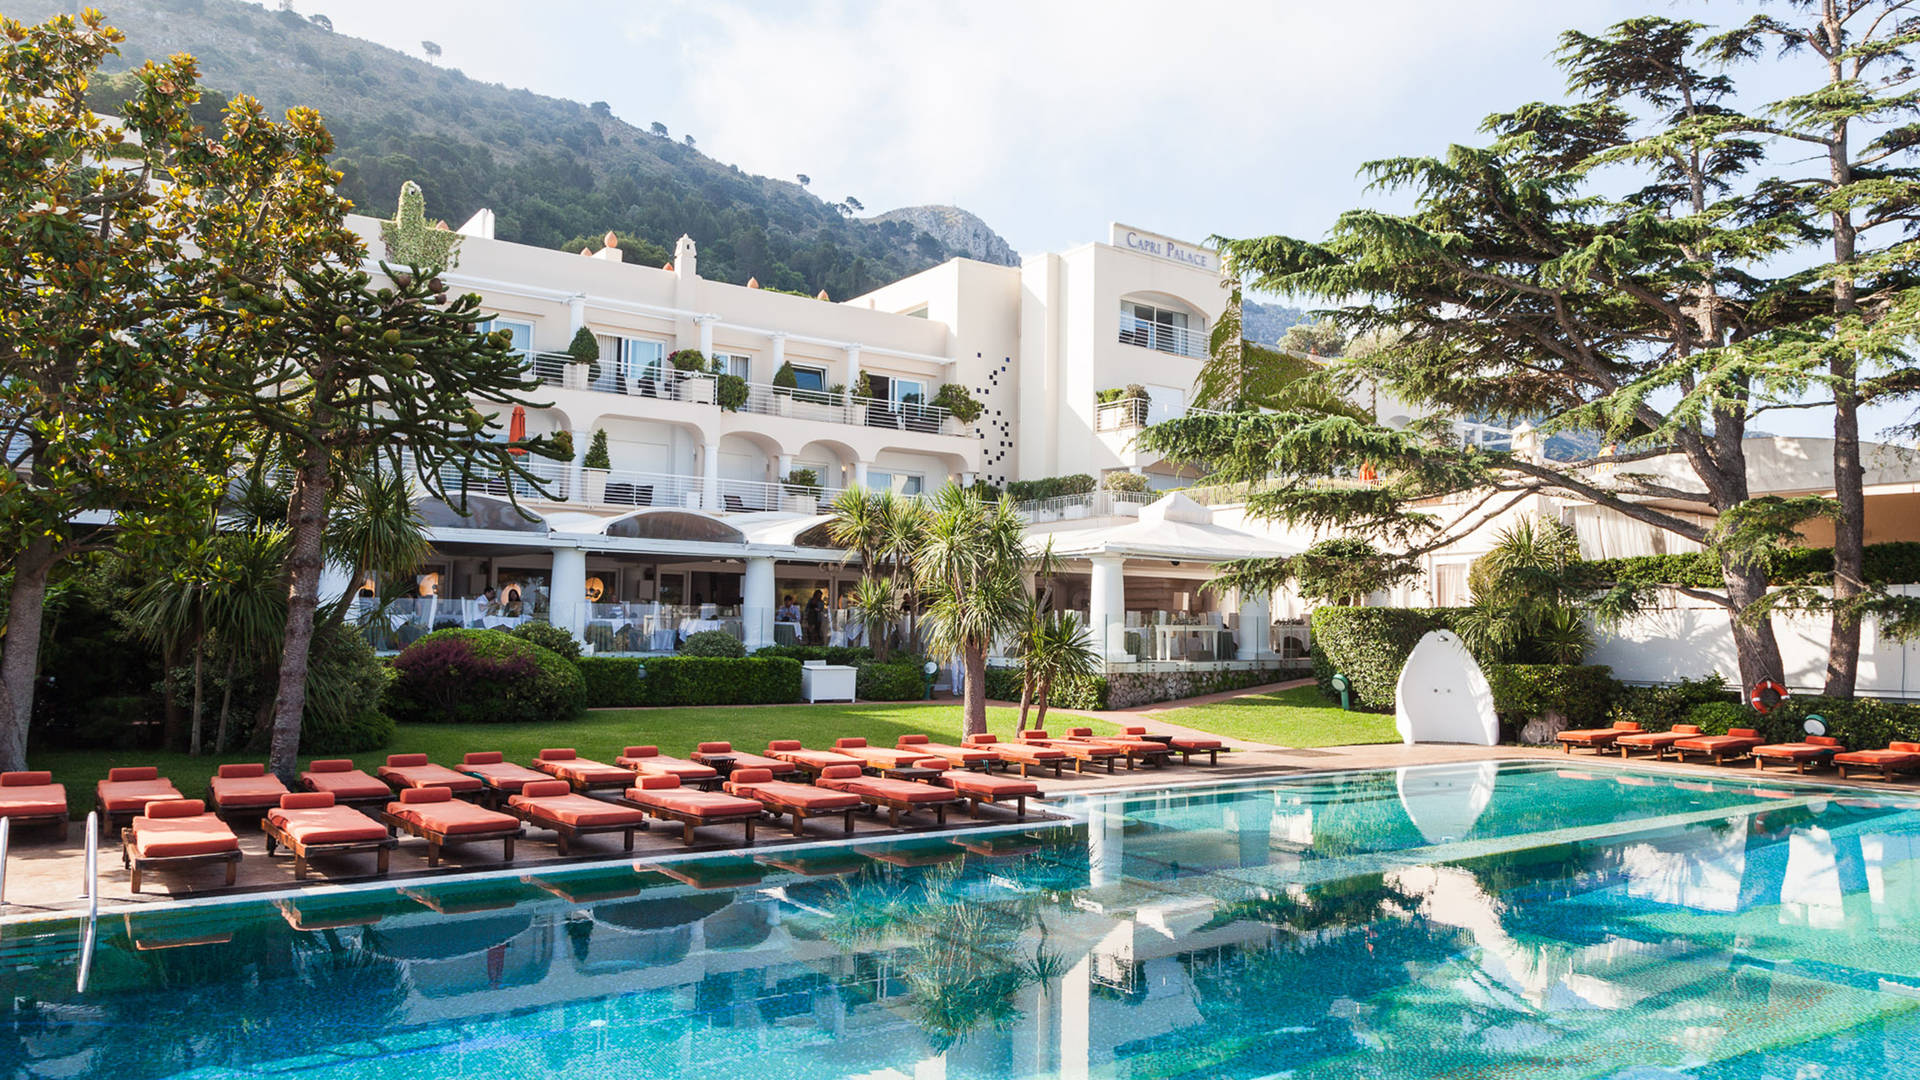 Swimming pool view at Jumeirah Capri Palace